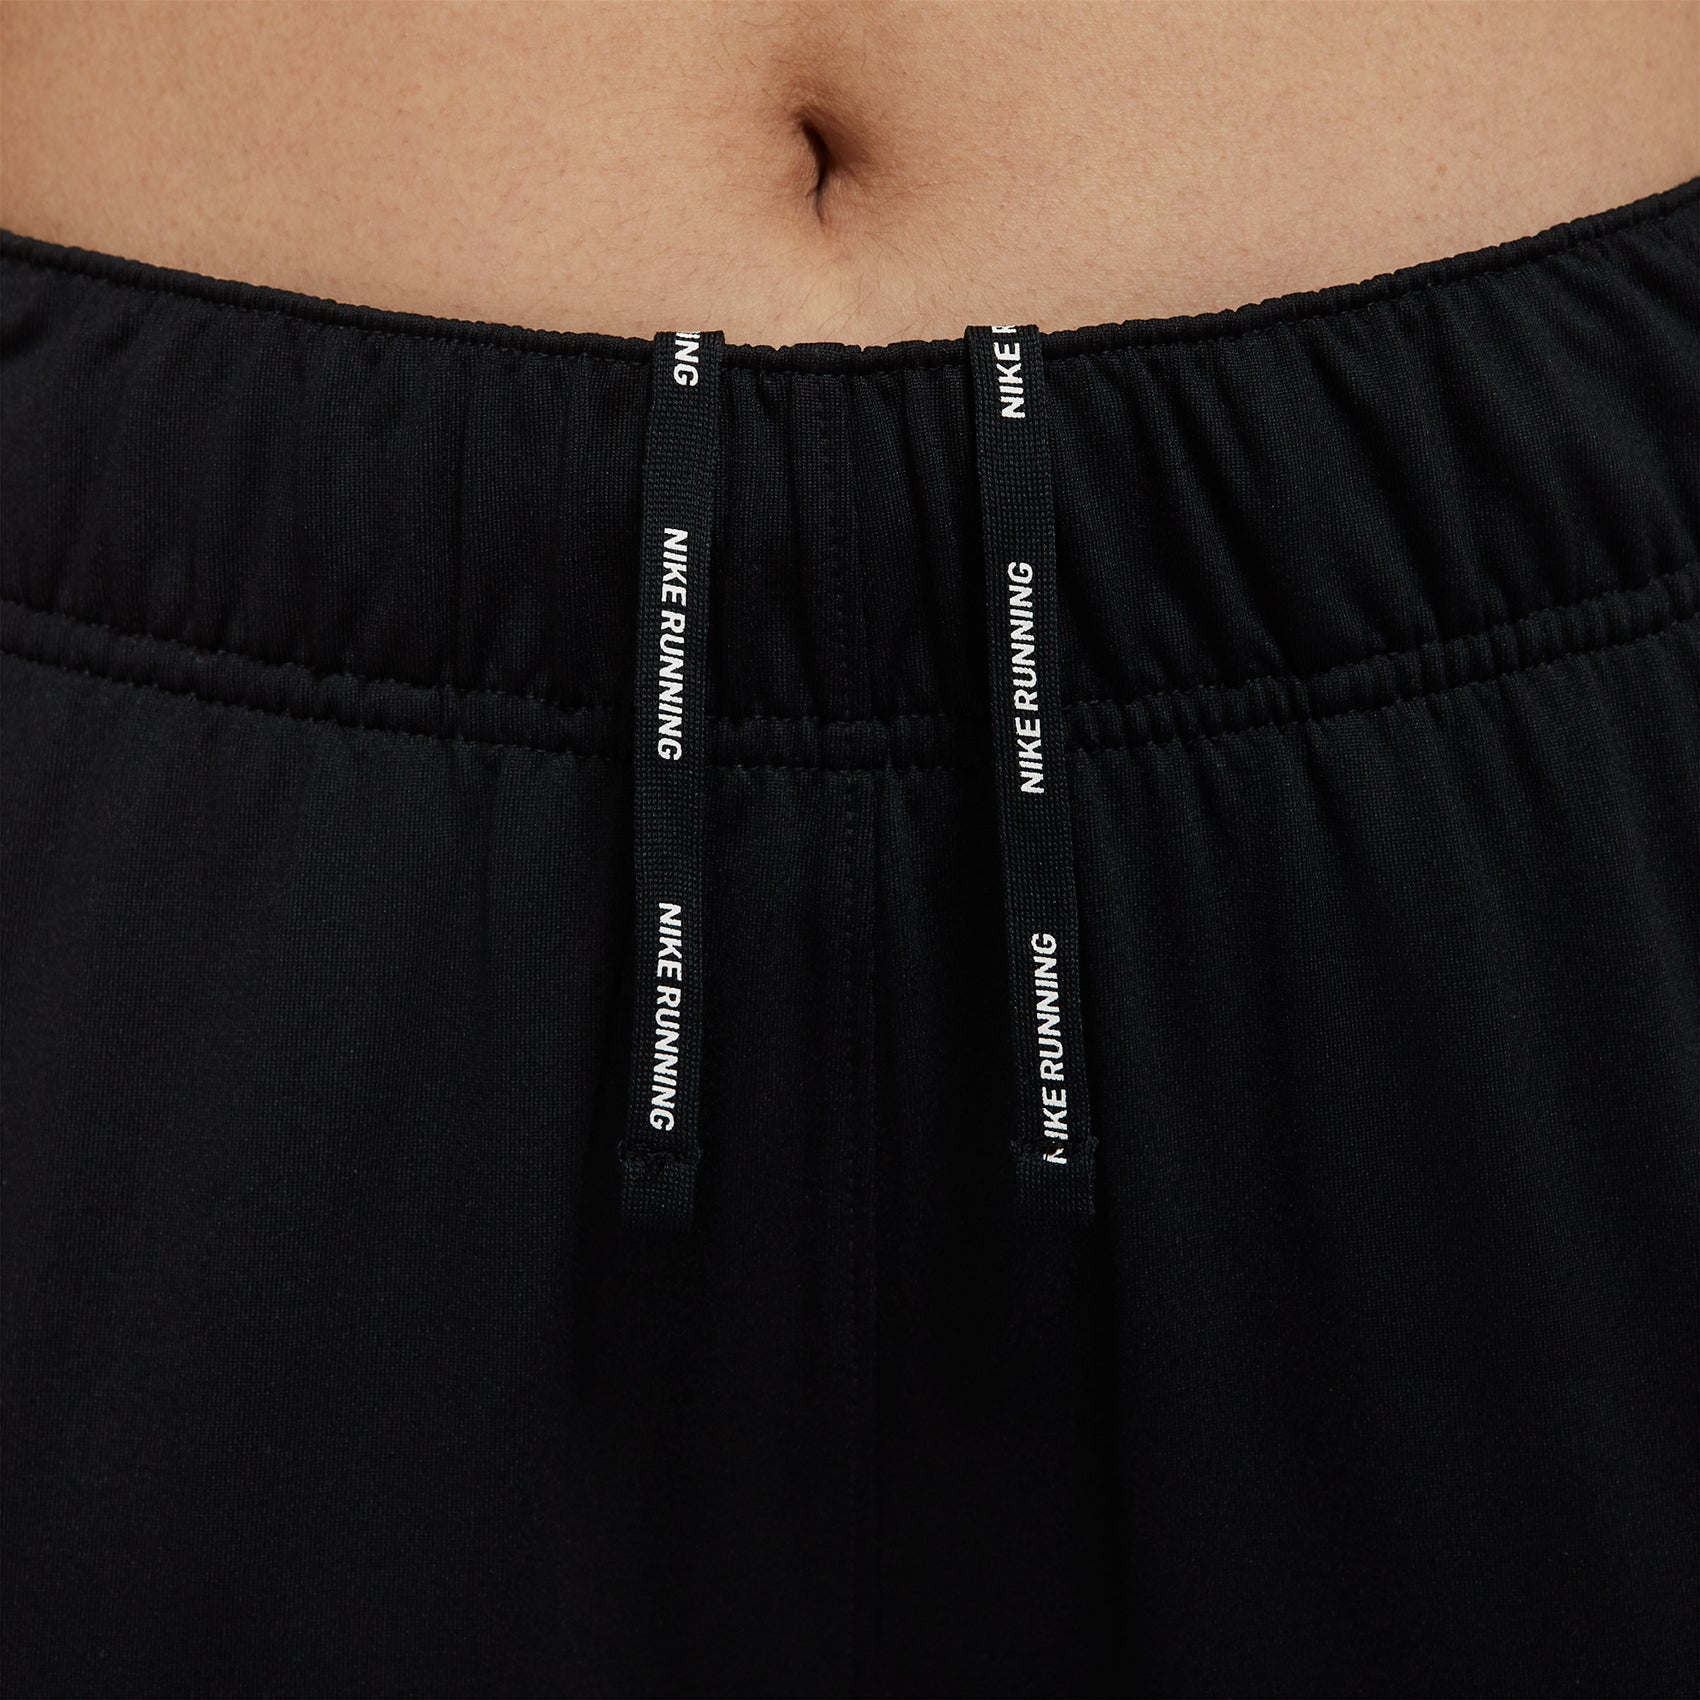 Nike Dri-FIT Essential Women s Running Pants 